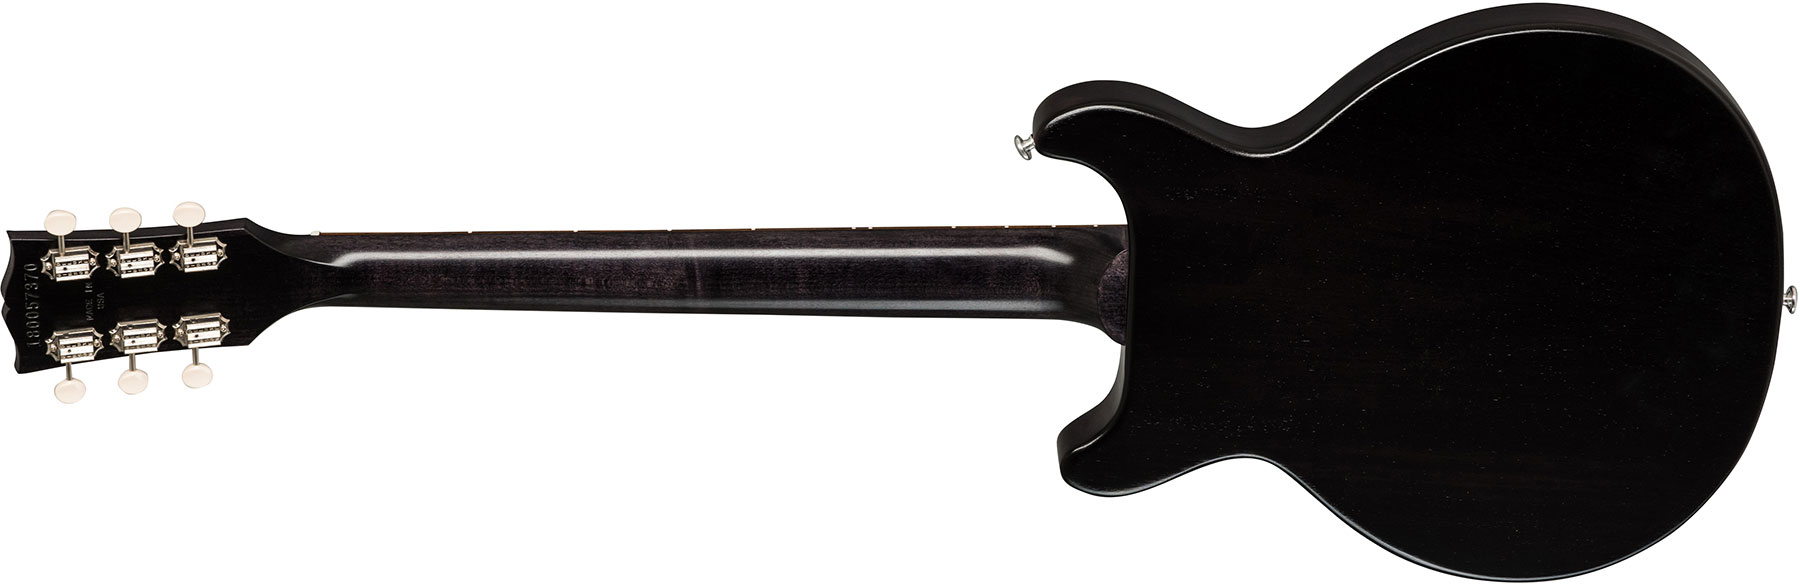 Gibson Les Paul Junior Dc Tribute 2019 P90 Ht Rw - Worn Ebony - Enkel gesneden elektrische gitaar - Variation 2